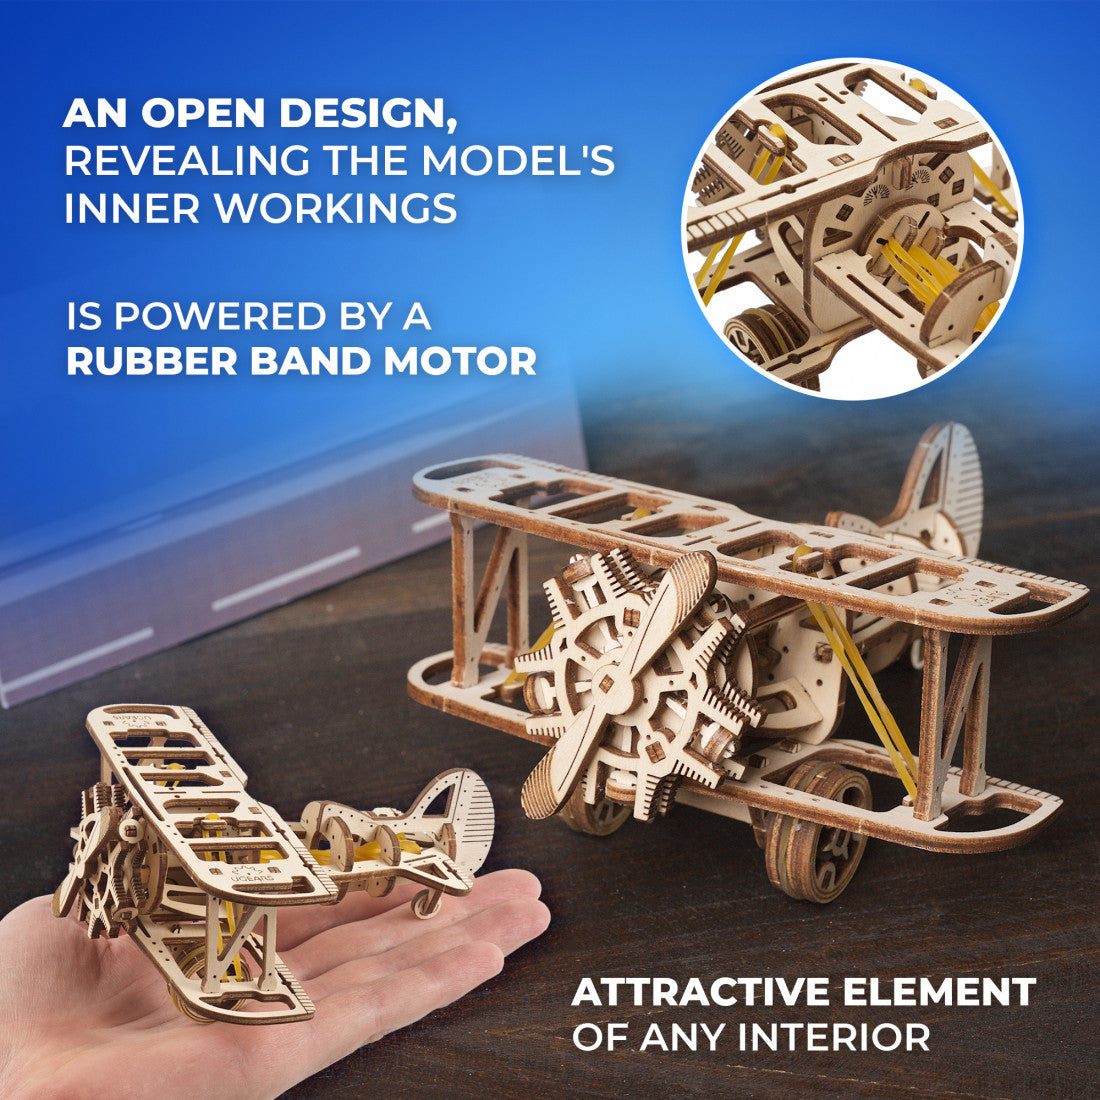 houten 3D puzzel vliegtuig tweedekker - mini-biplane level : easy 84pc - puzzle en bois 3D avion biplan mini